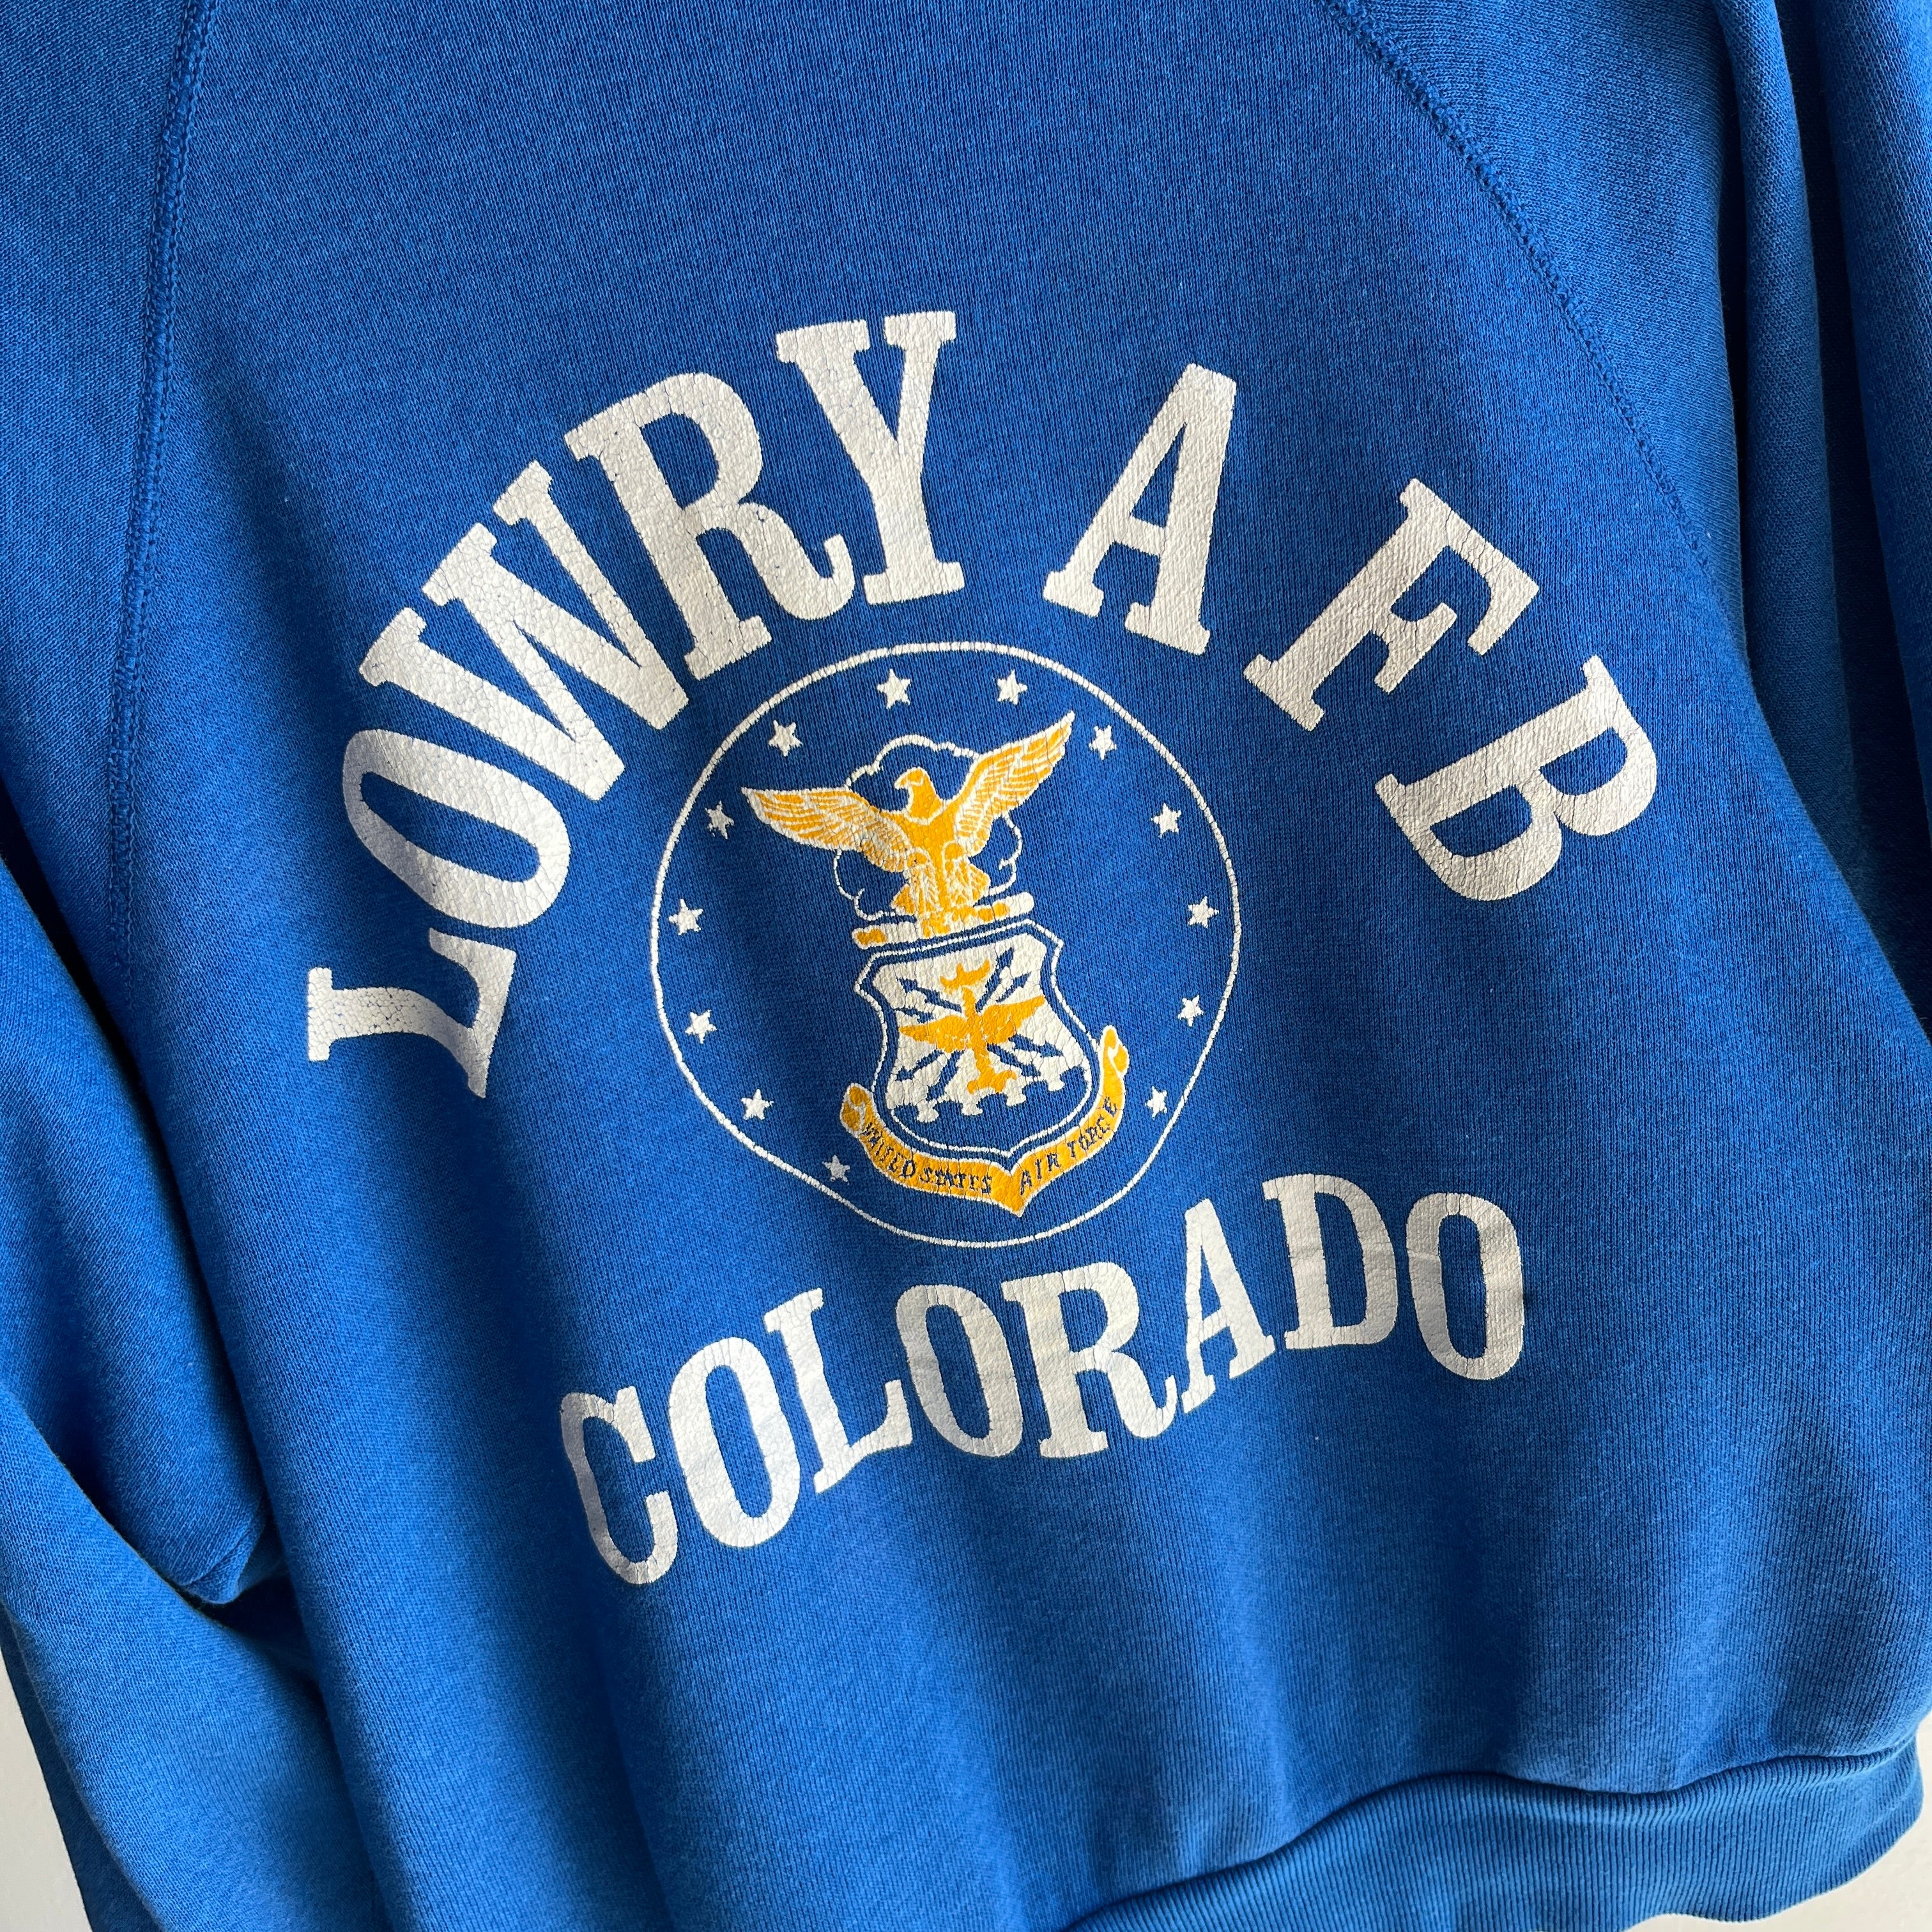 1980s Lowry AFB Colorado US Air Force Sweatshirt by Artex